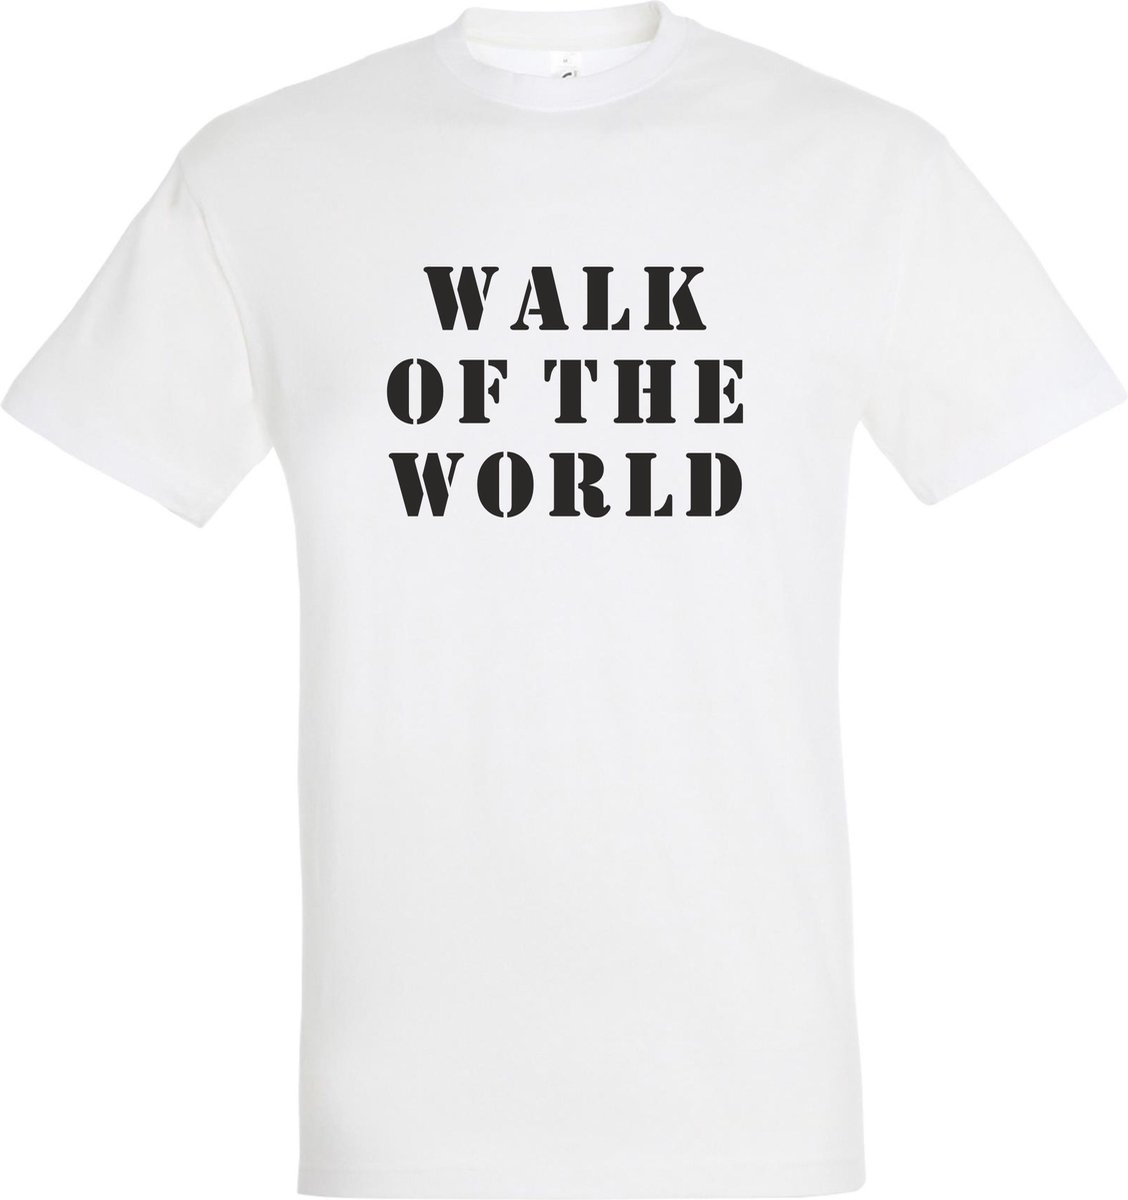 T-shirt Walk of the world |Wandelvierdaagse | vierdaagse Nijmegen | Roze woensdag | Wit | maat S